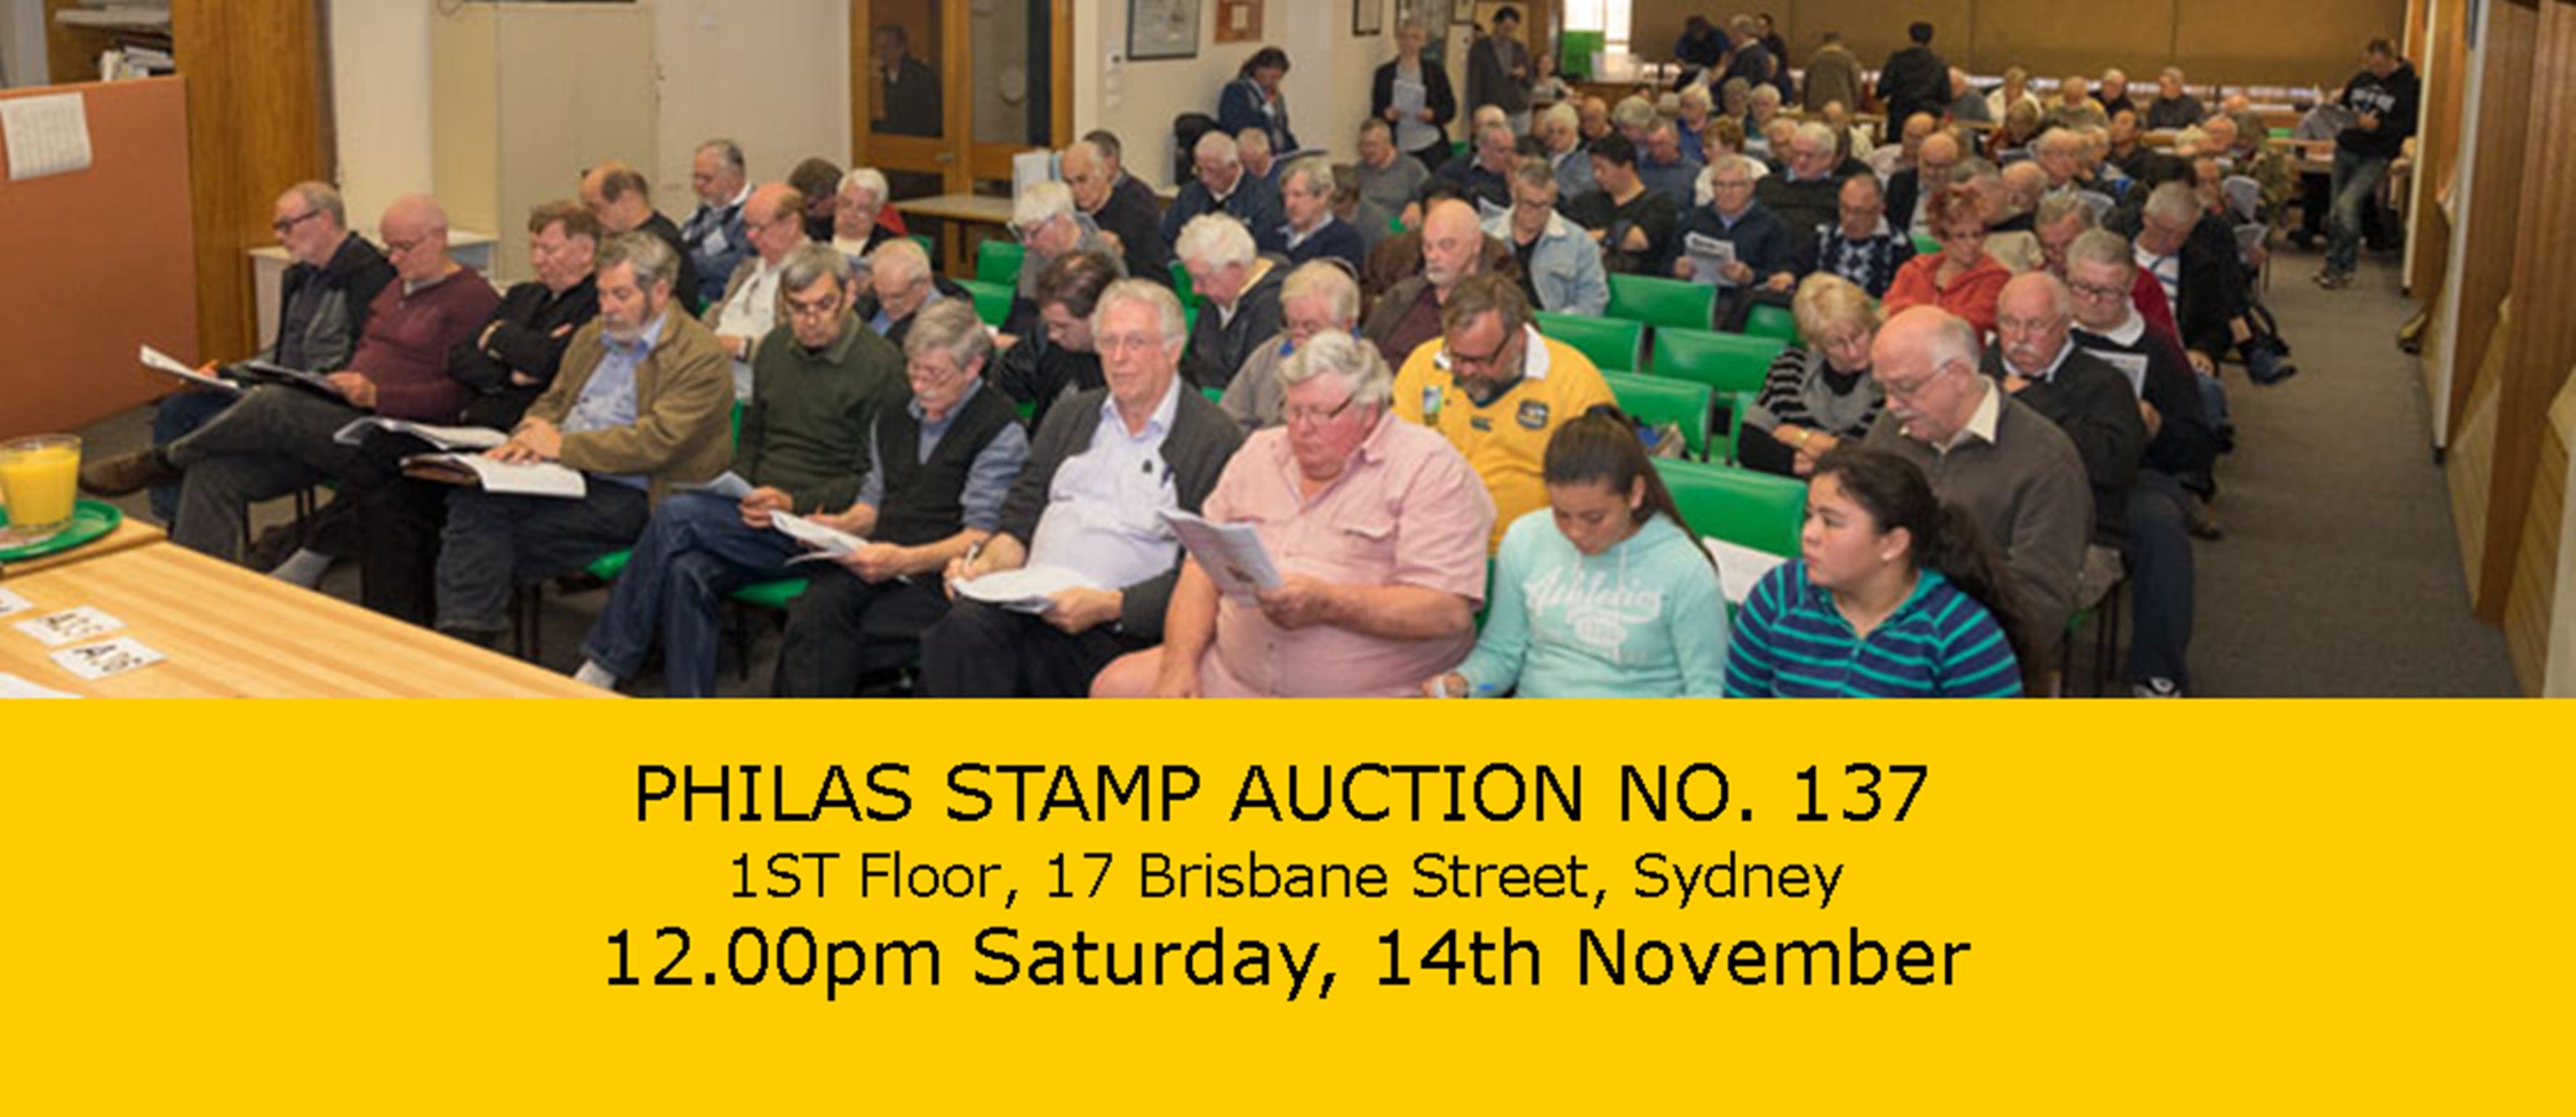 PHILAS Stamp Auction No. 137 - Tourism Canberra